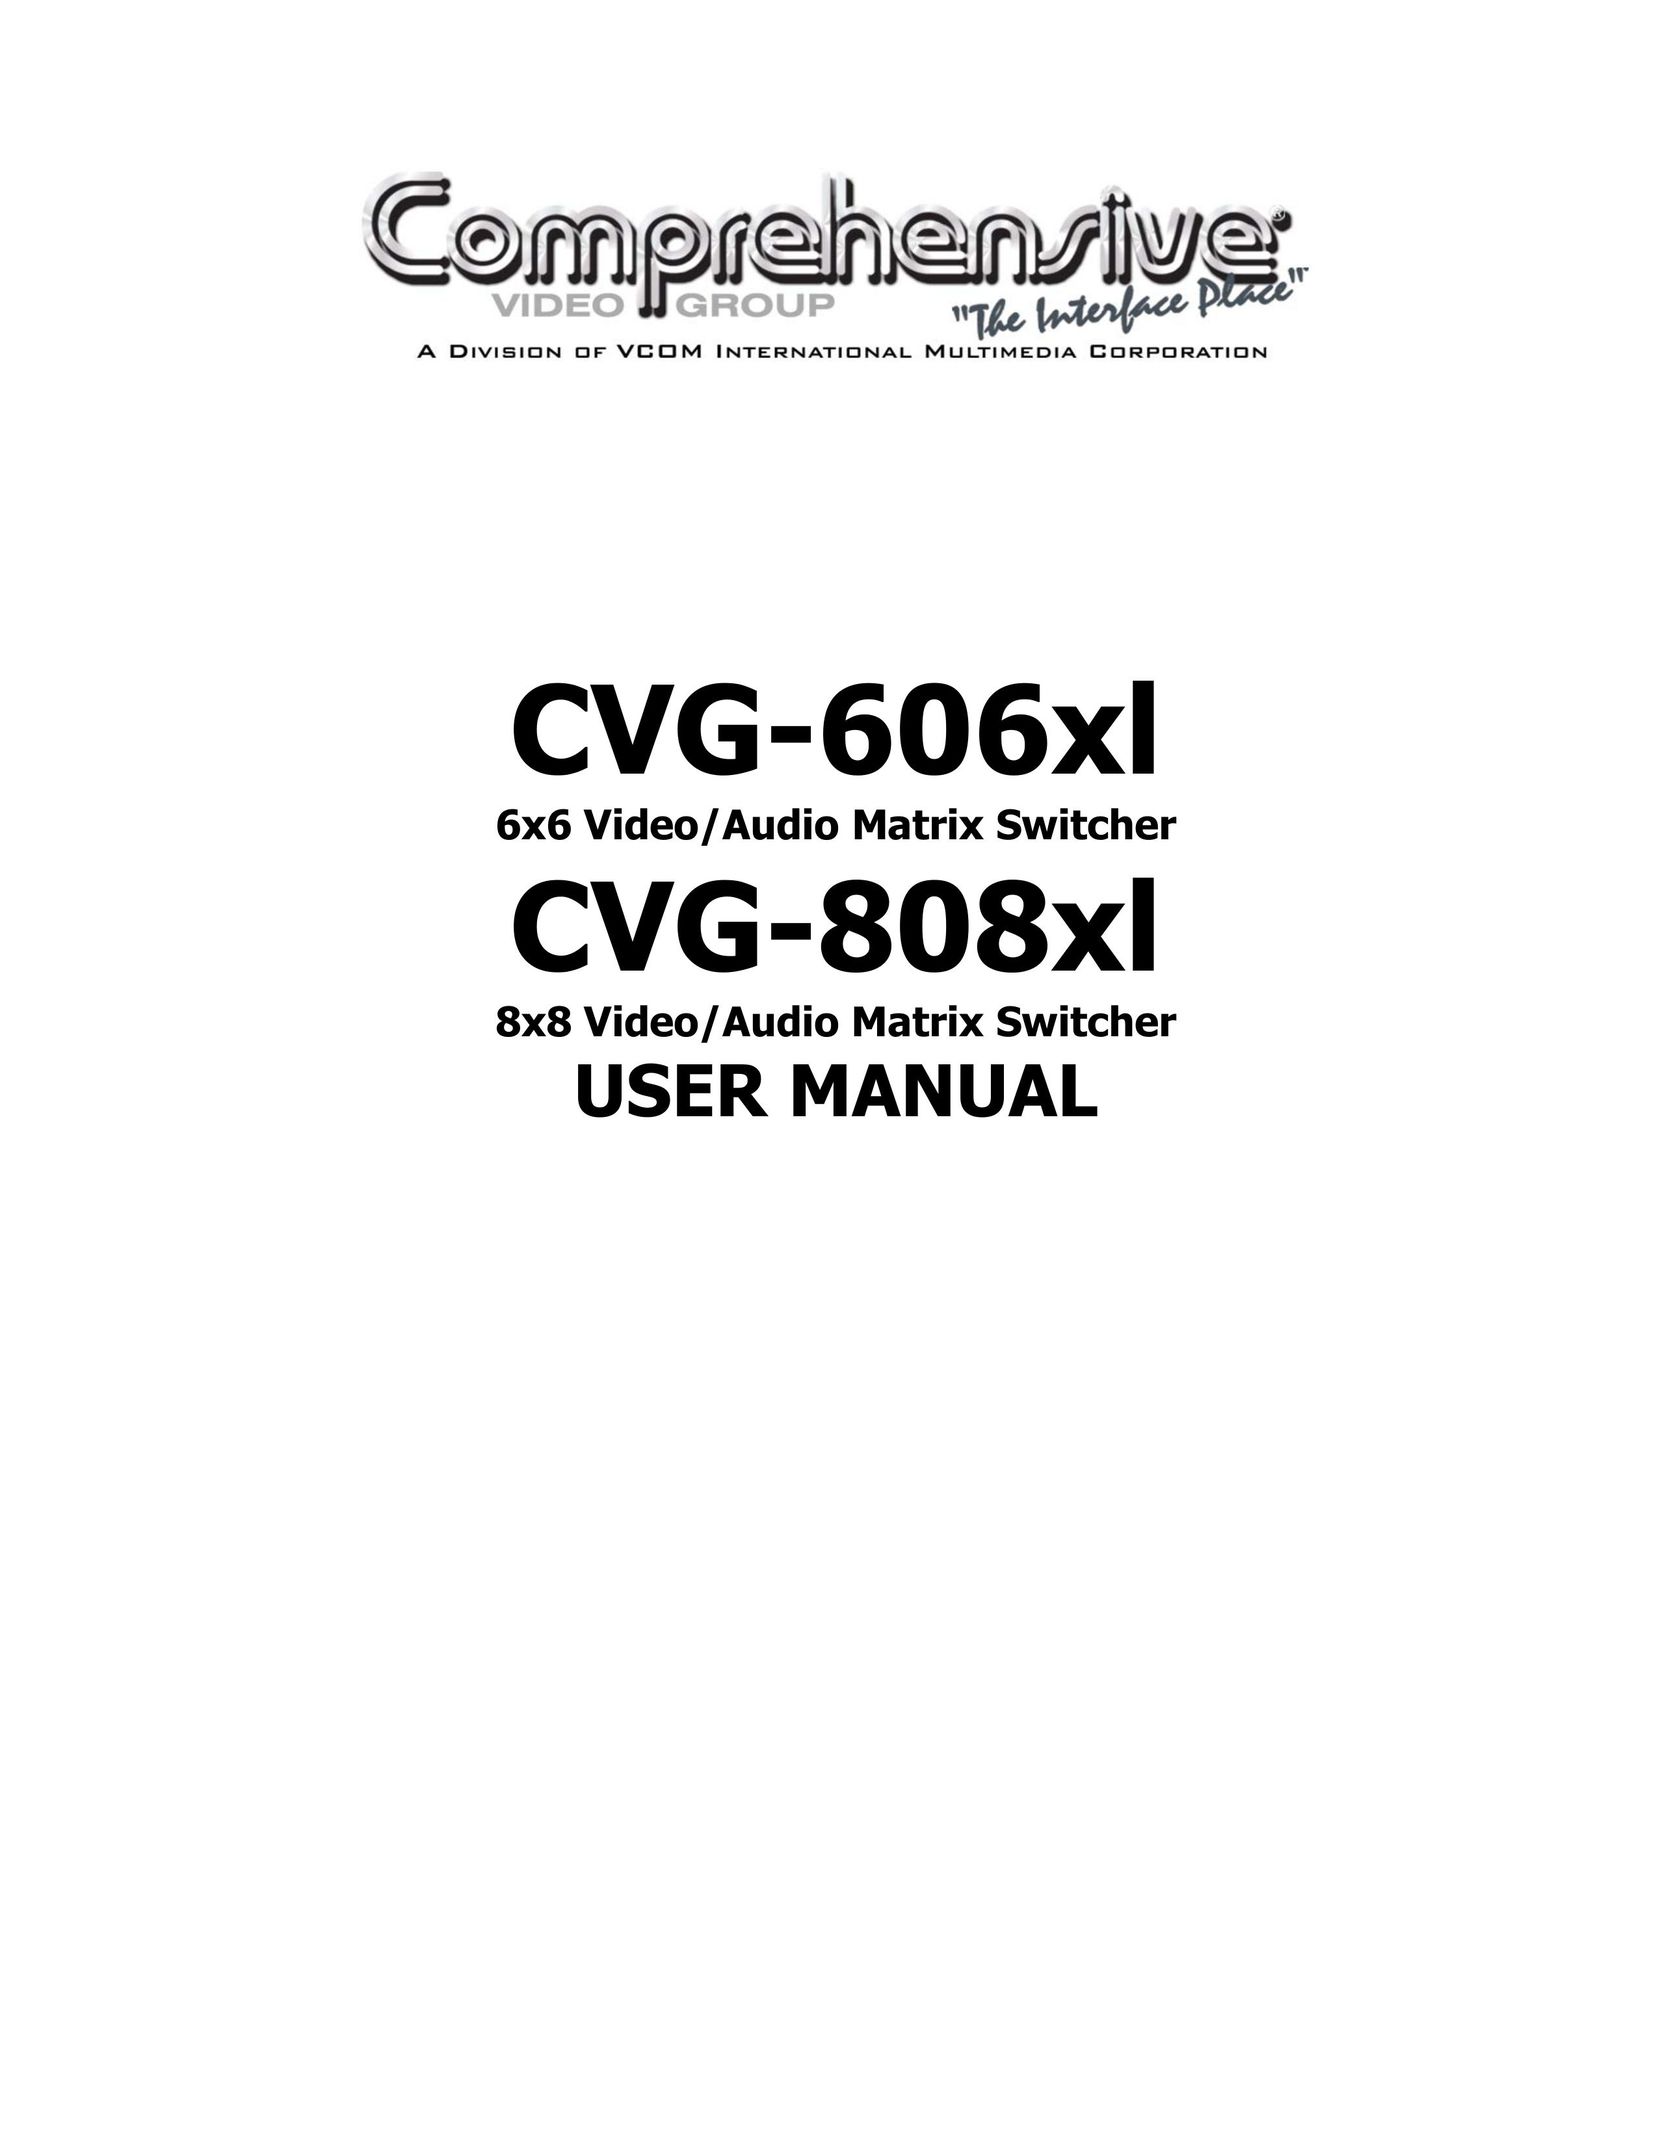 Comprehensive Video CVG-808xl Switch User Manual